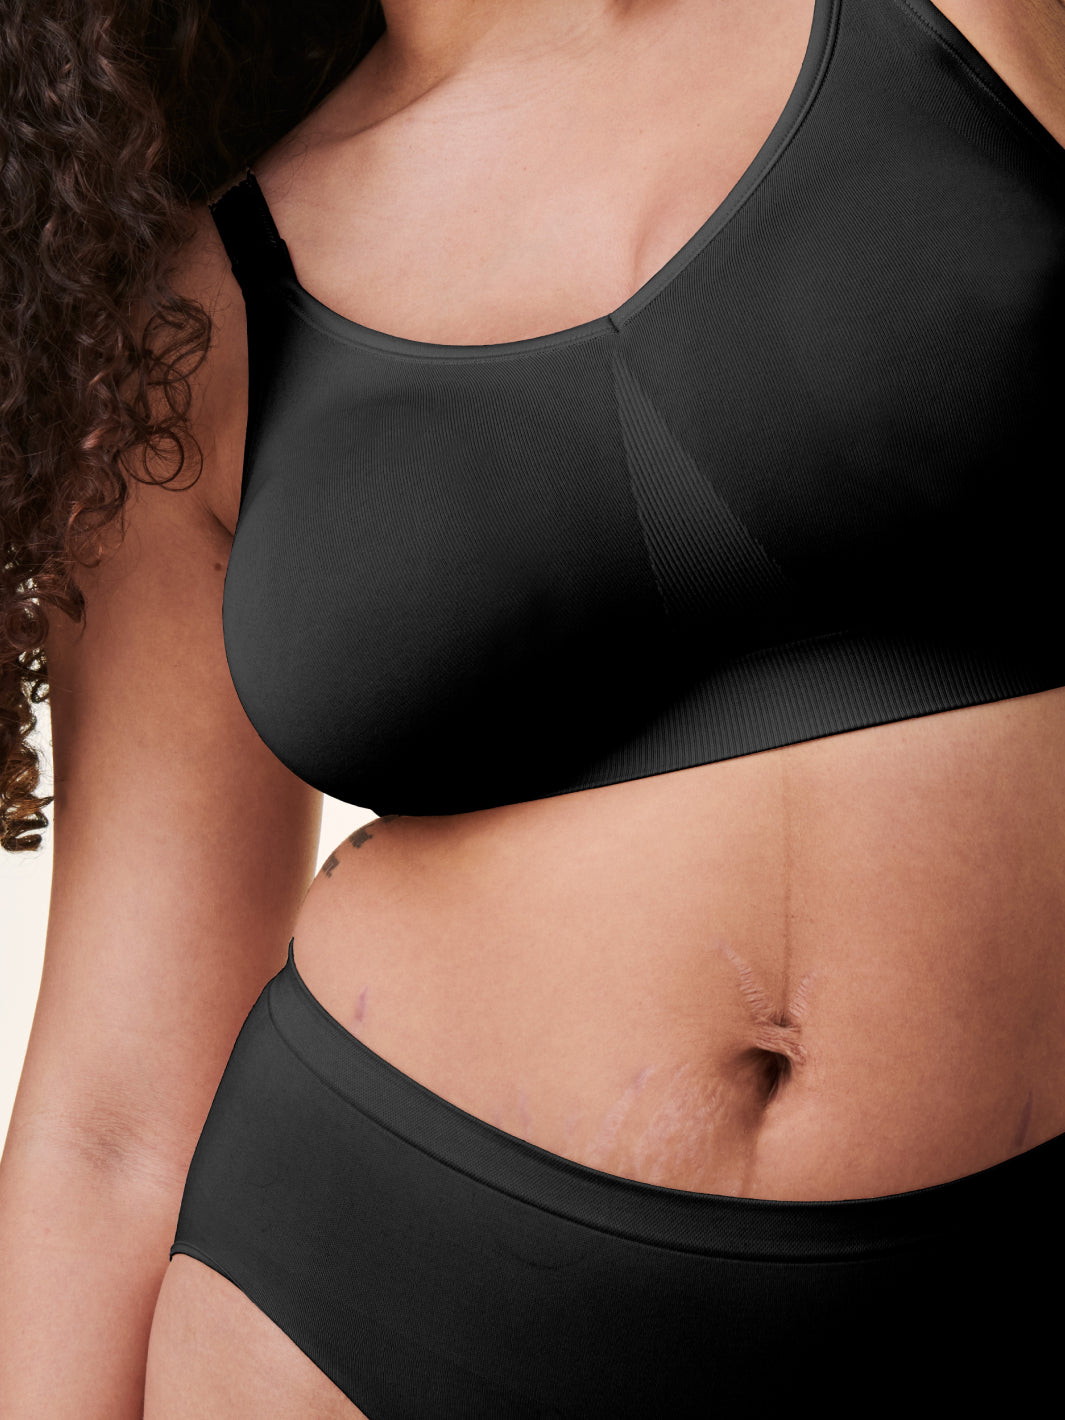 Bravado! Designs Women's Body Silk Seamless Full Cup Nursing Bra - Black L  : Target